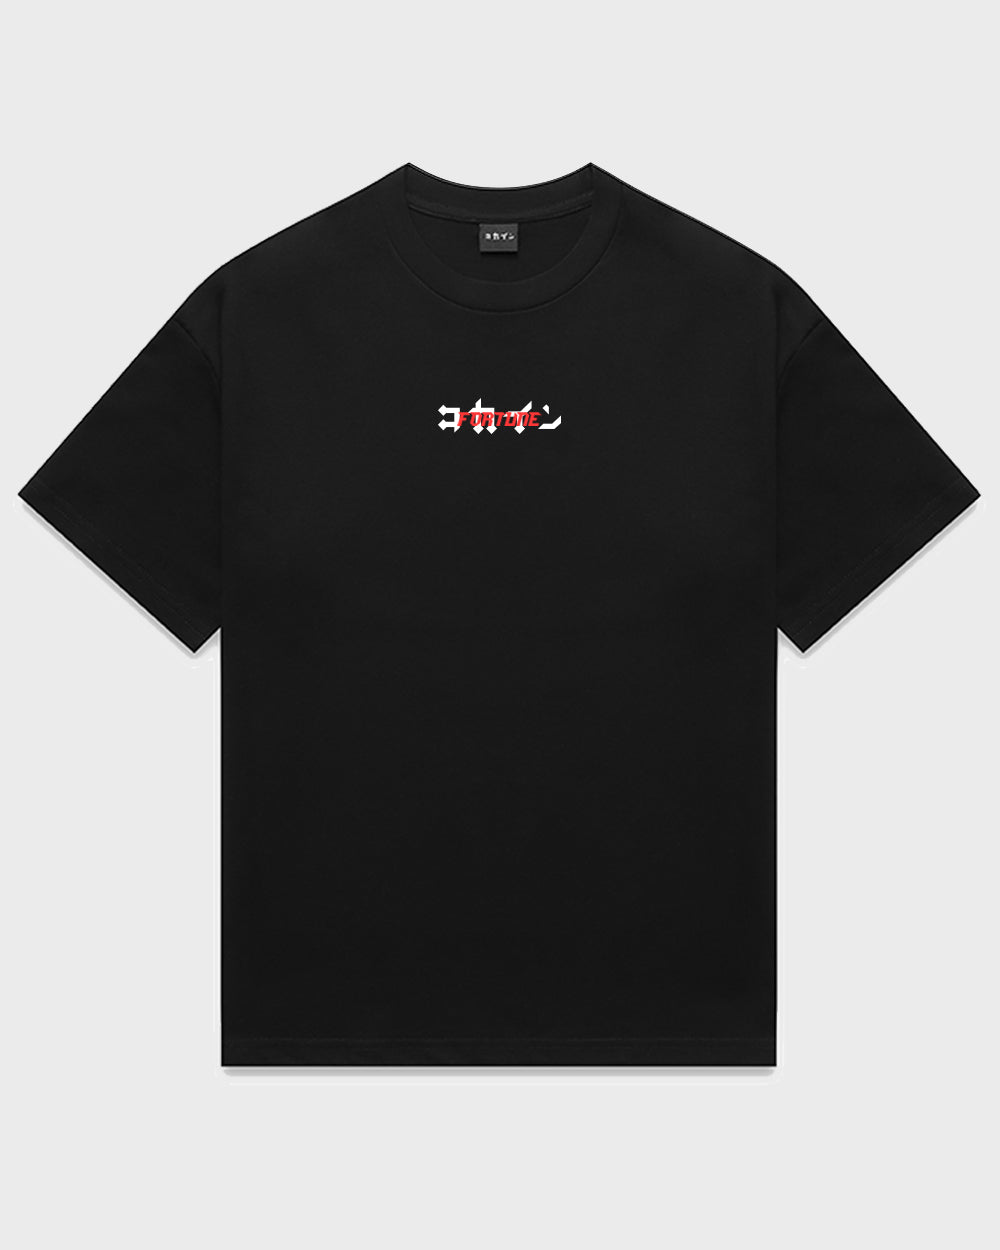 Fortune Gxng x KOKAINE "Collab" T Shirt // Black